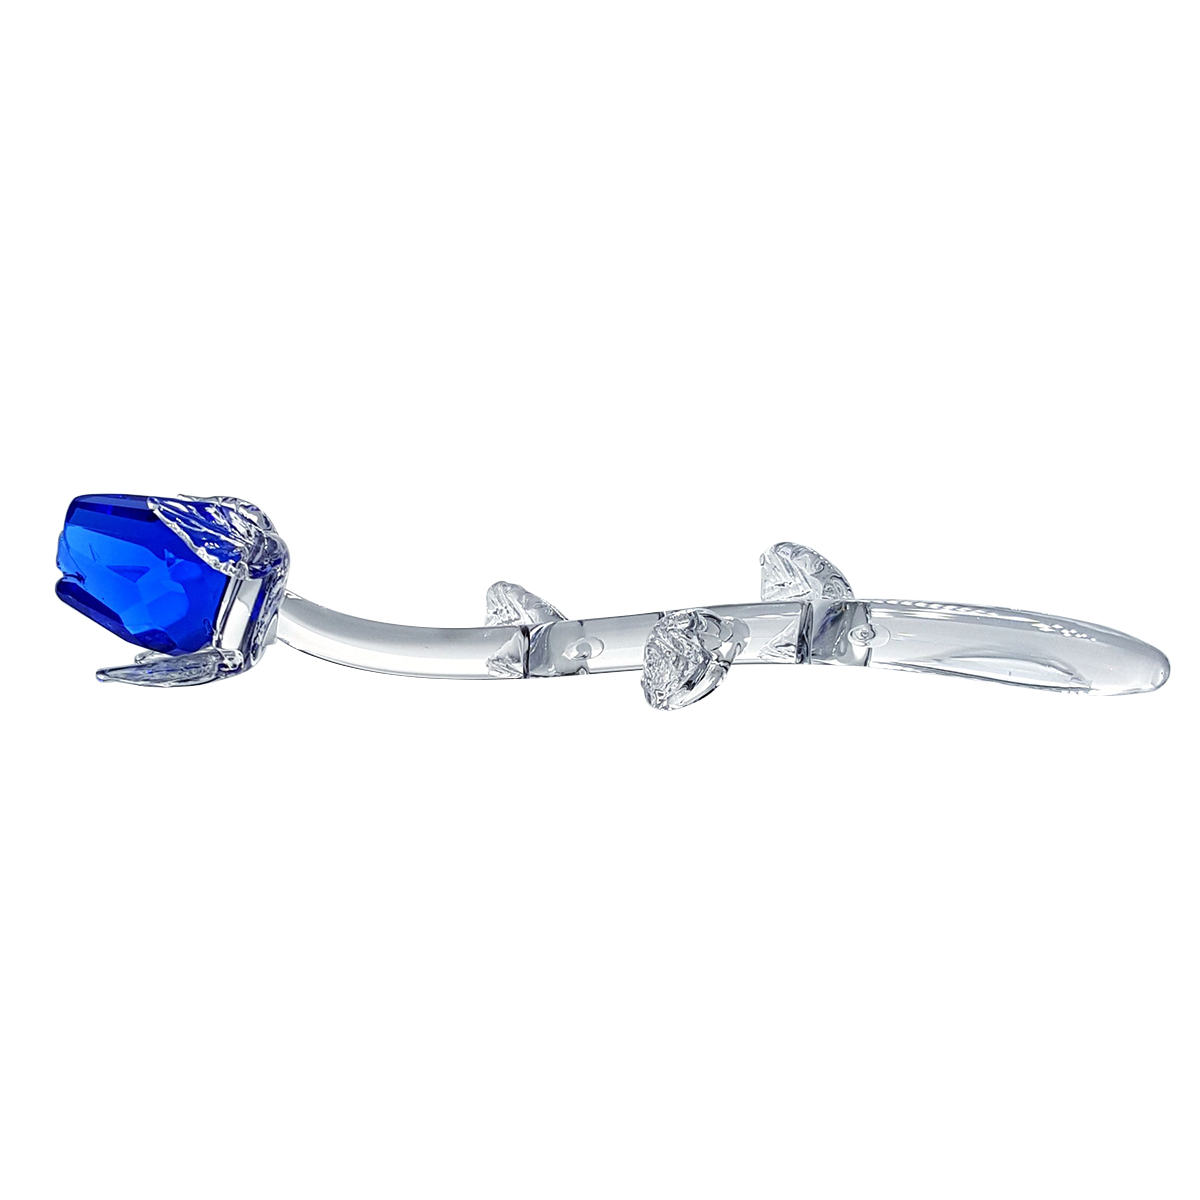 Crystal Blue Laying Rosebud By Crystal Florida - Click Image to Close